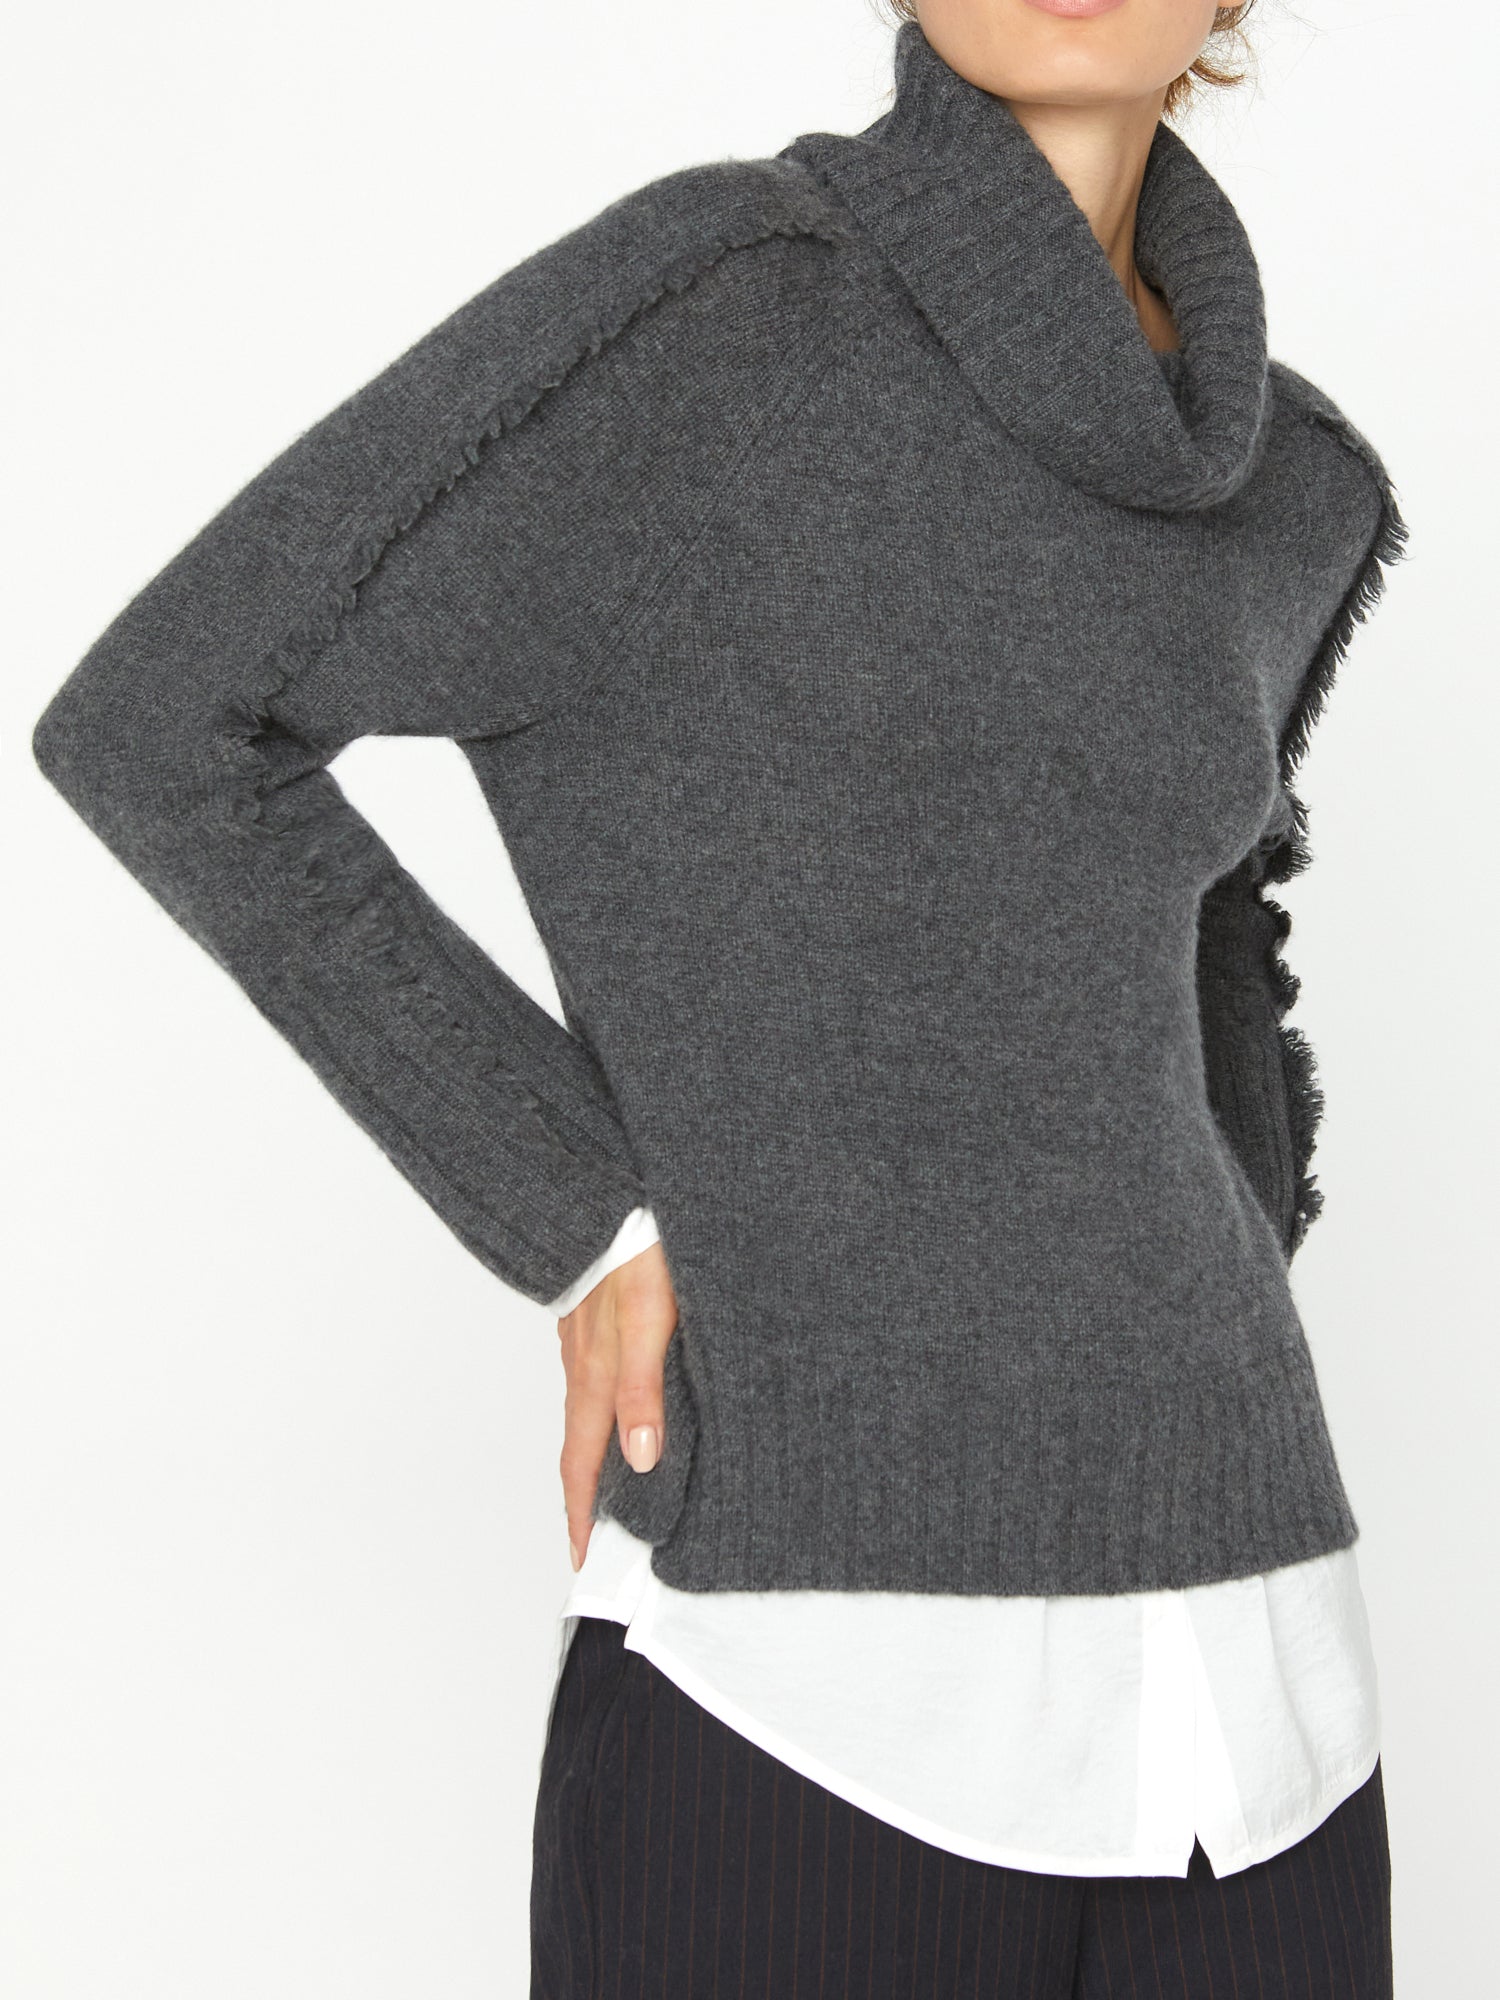 Jolie dark grey layered turtleneck sweater front view 2